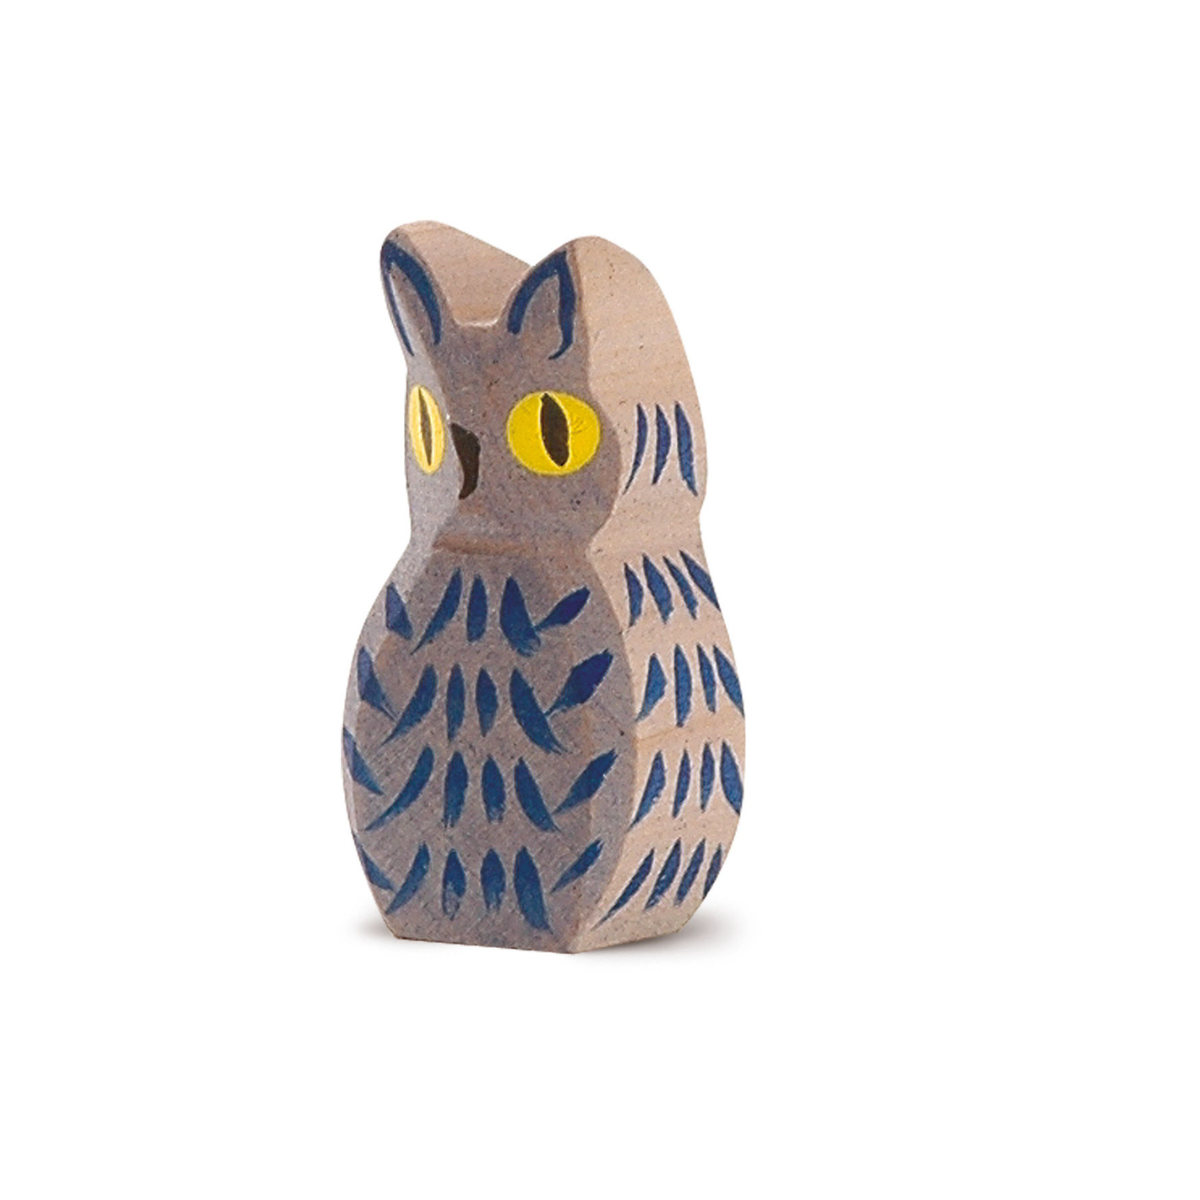 Owl blue